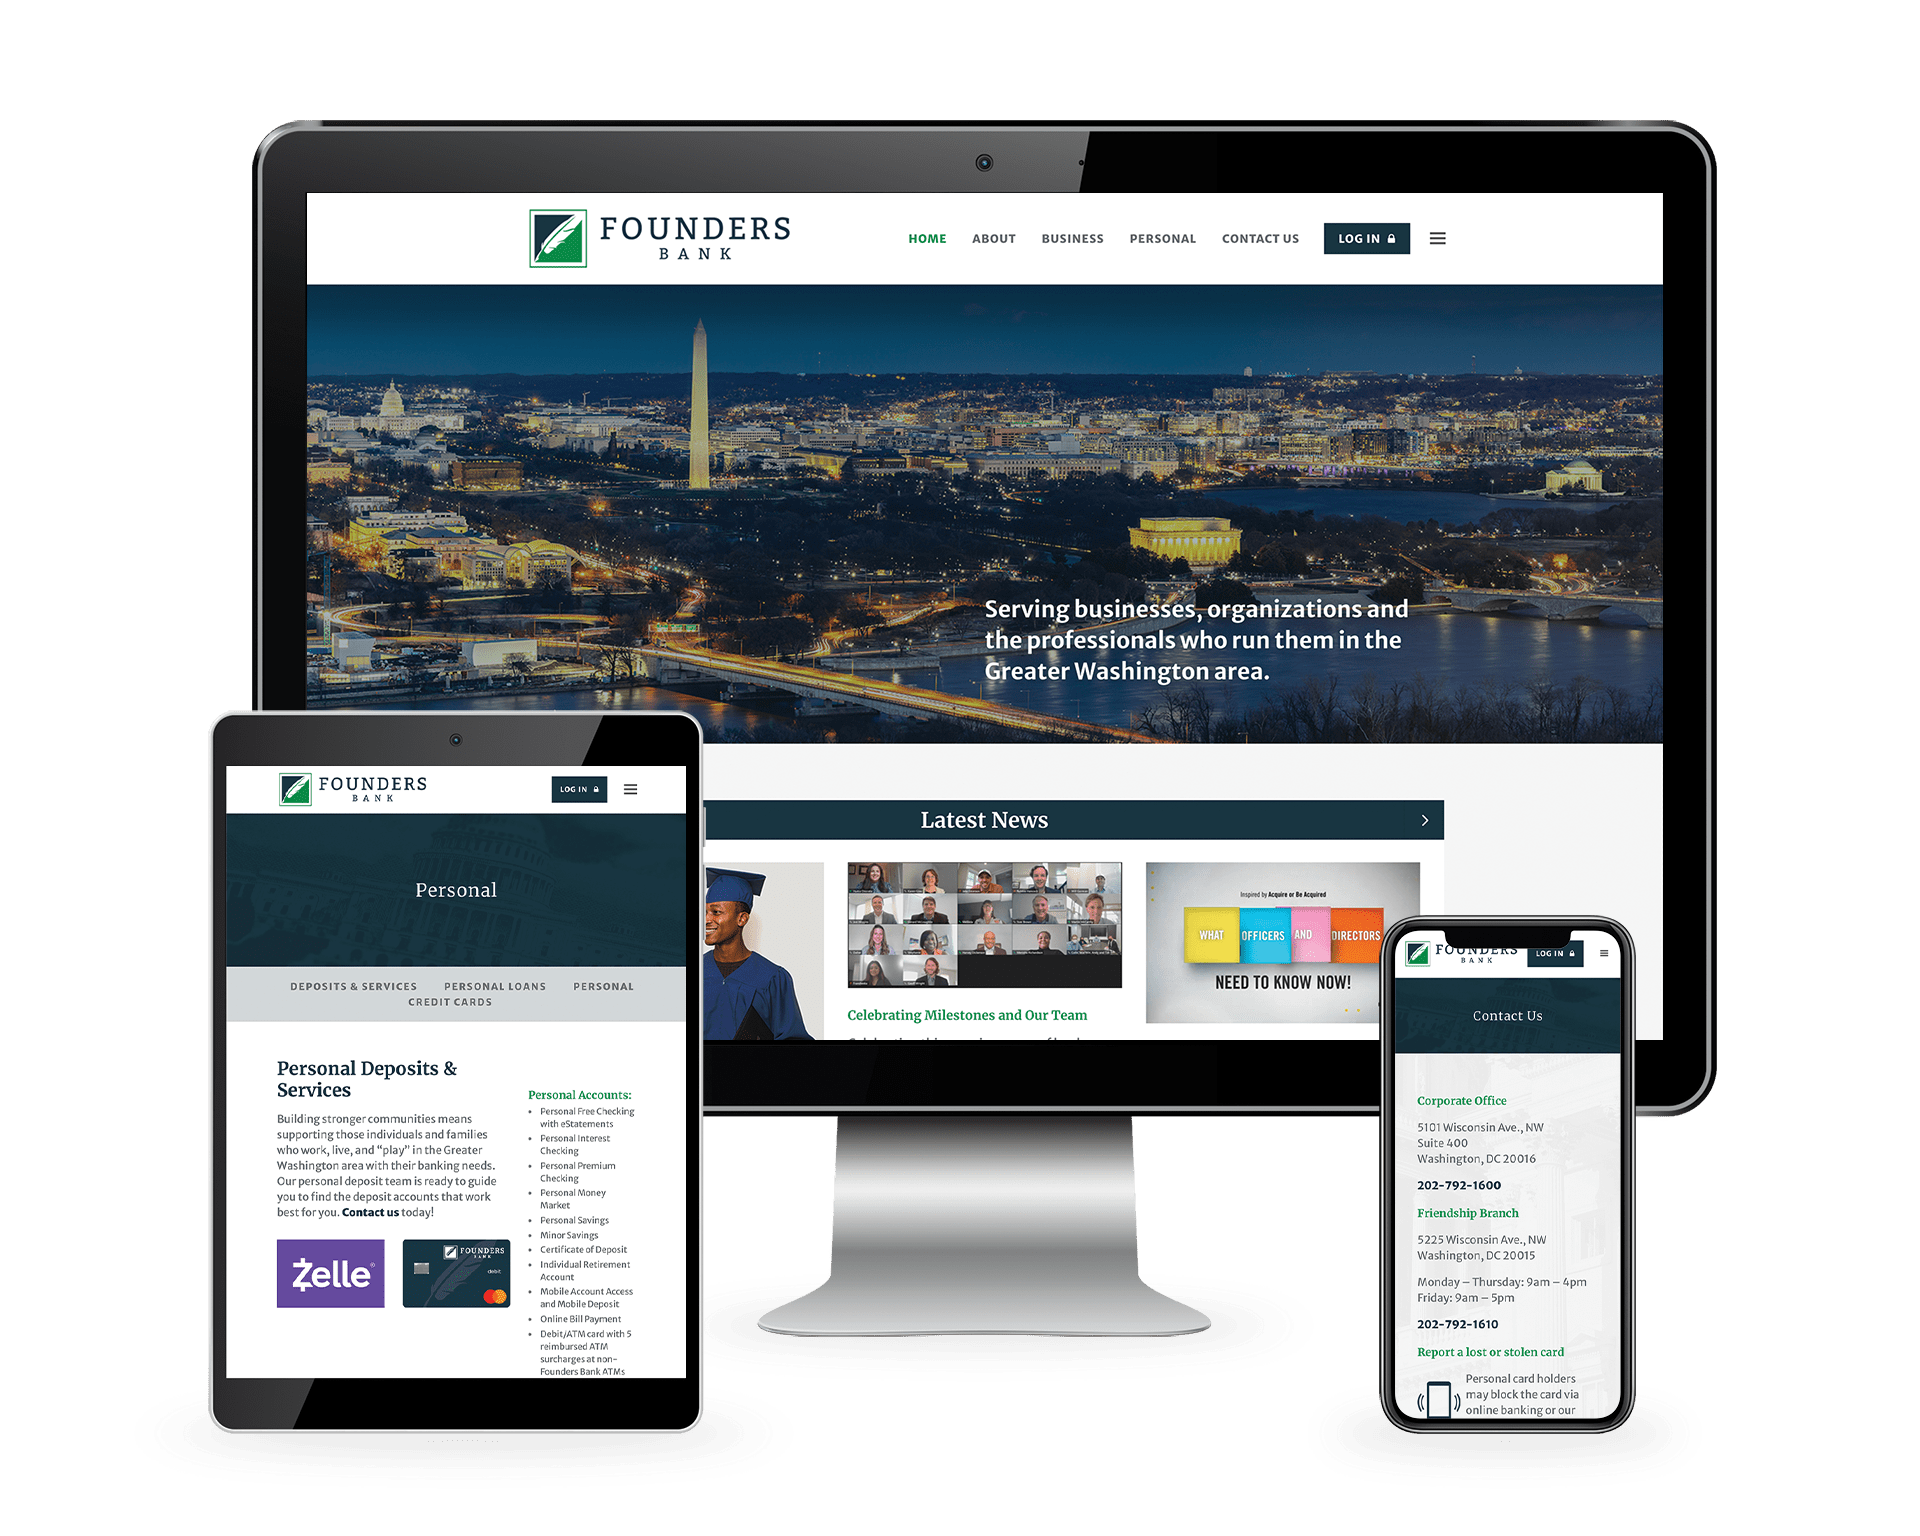 Founders Bank website design by Keybridge Web, the best web design company in Washington DC